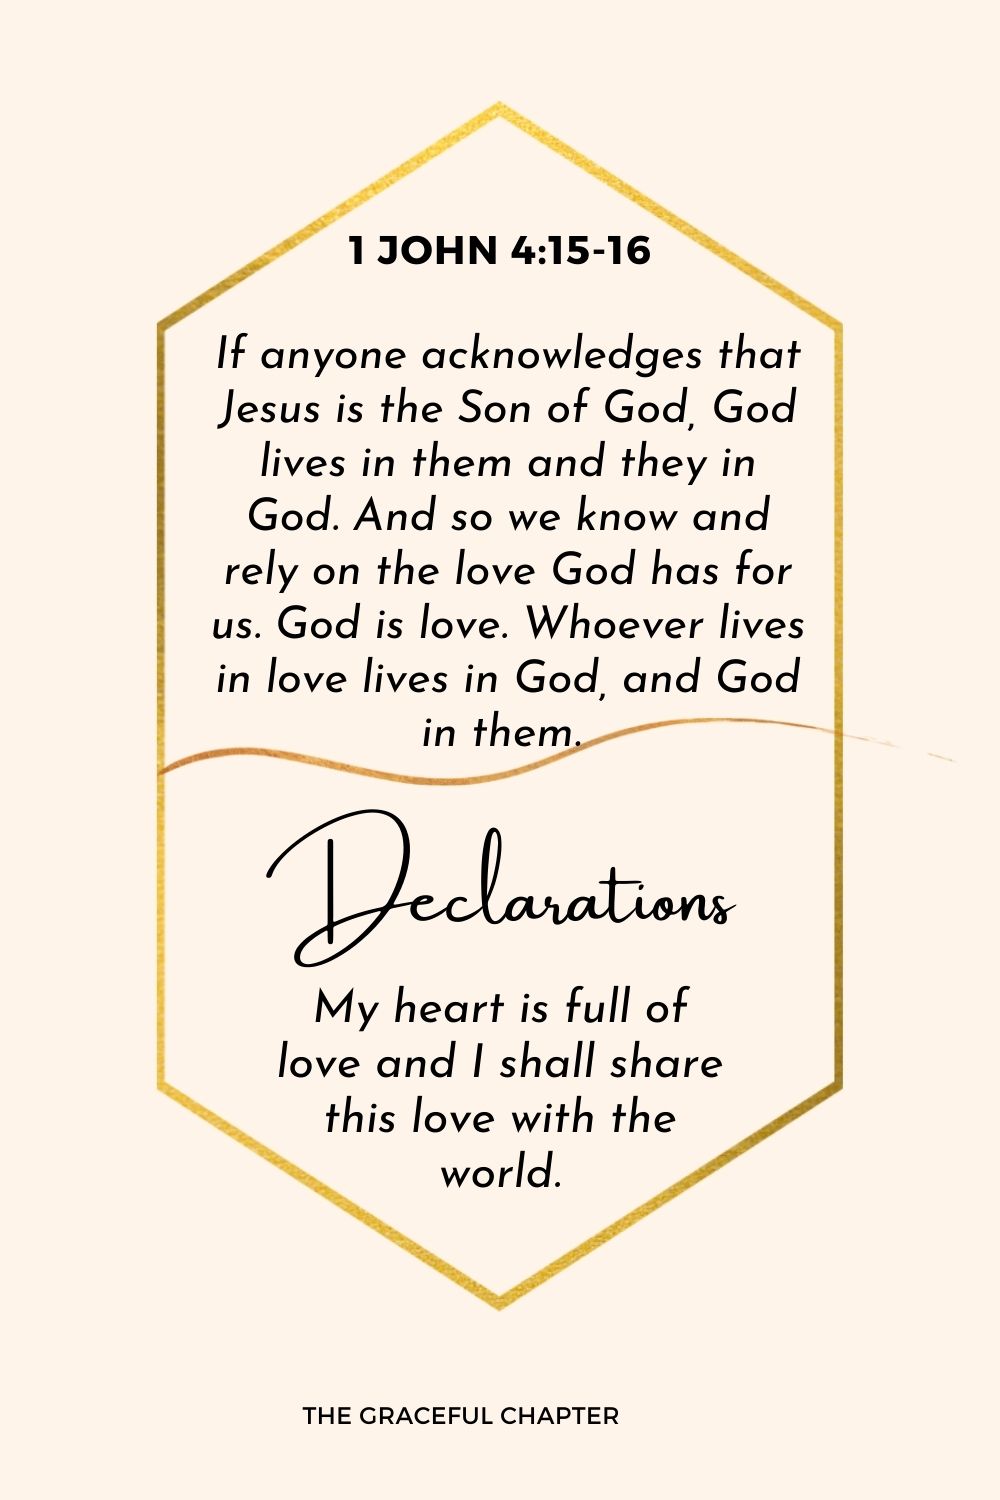 1 John 4:15-16 declaration